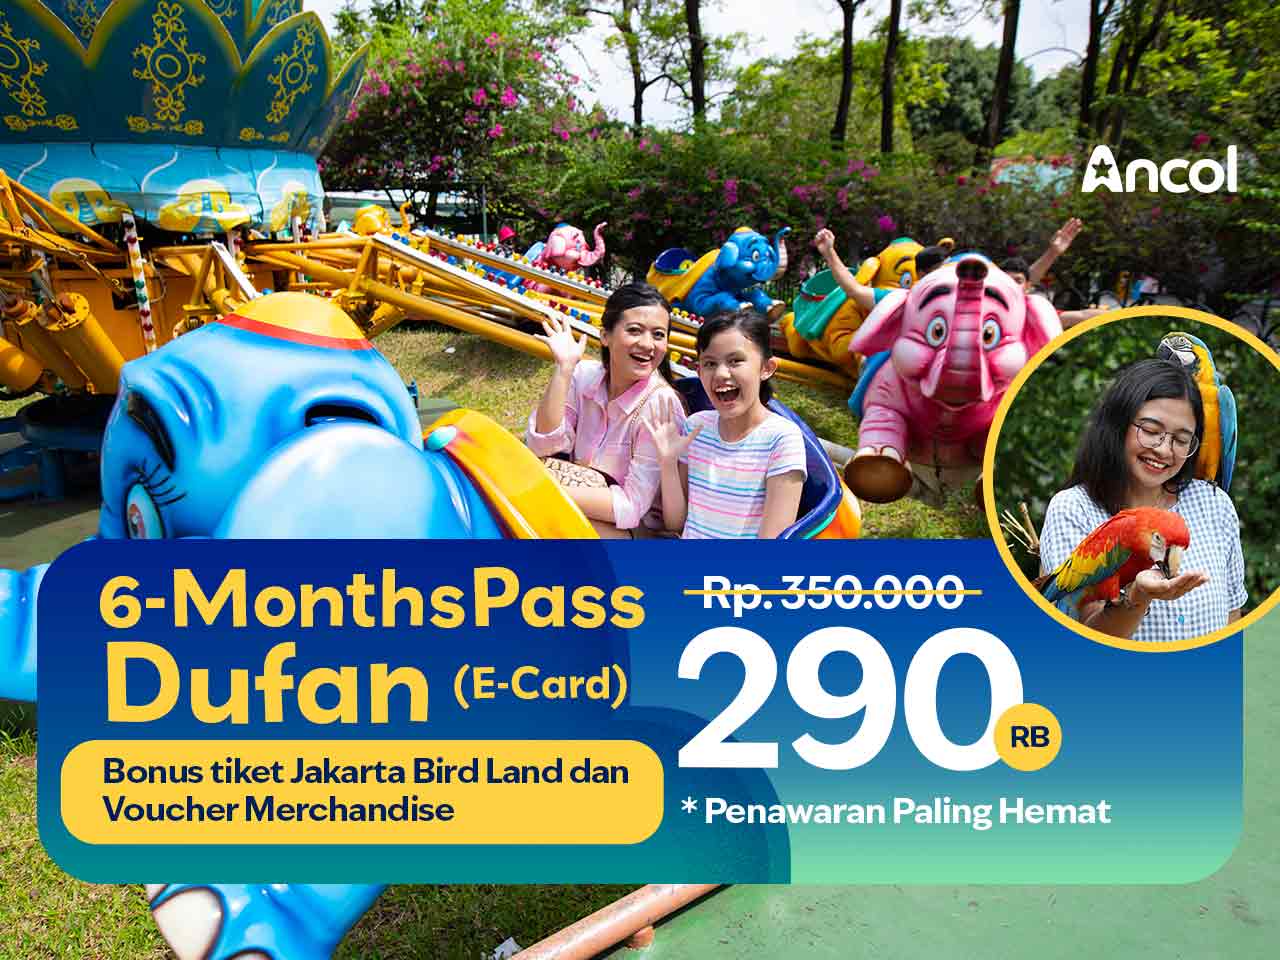 6 Bulan Gratis Main ke Dufan Dengan 6 Month Pass Ecard Cuma 290rb